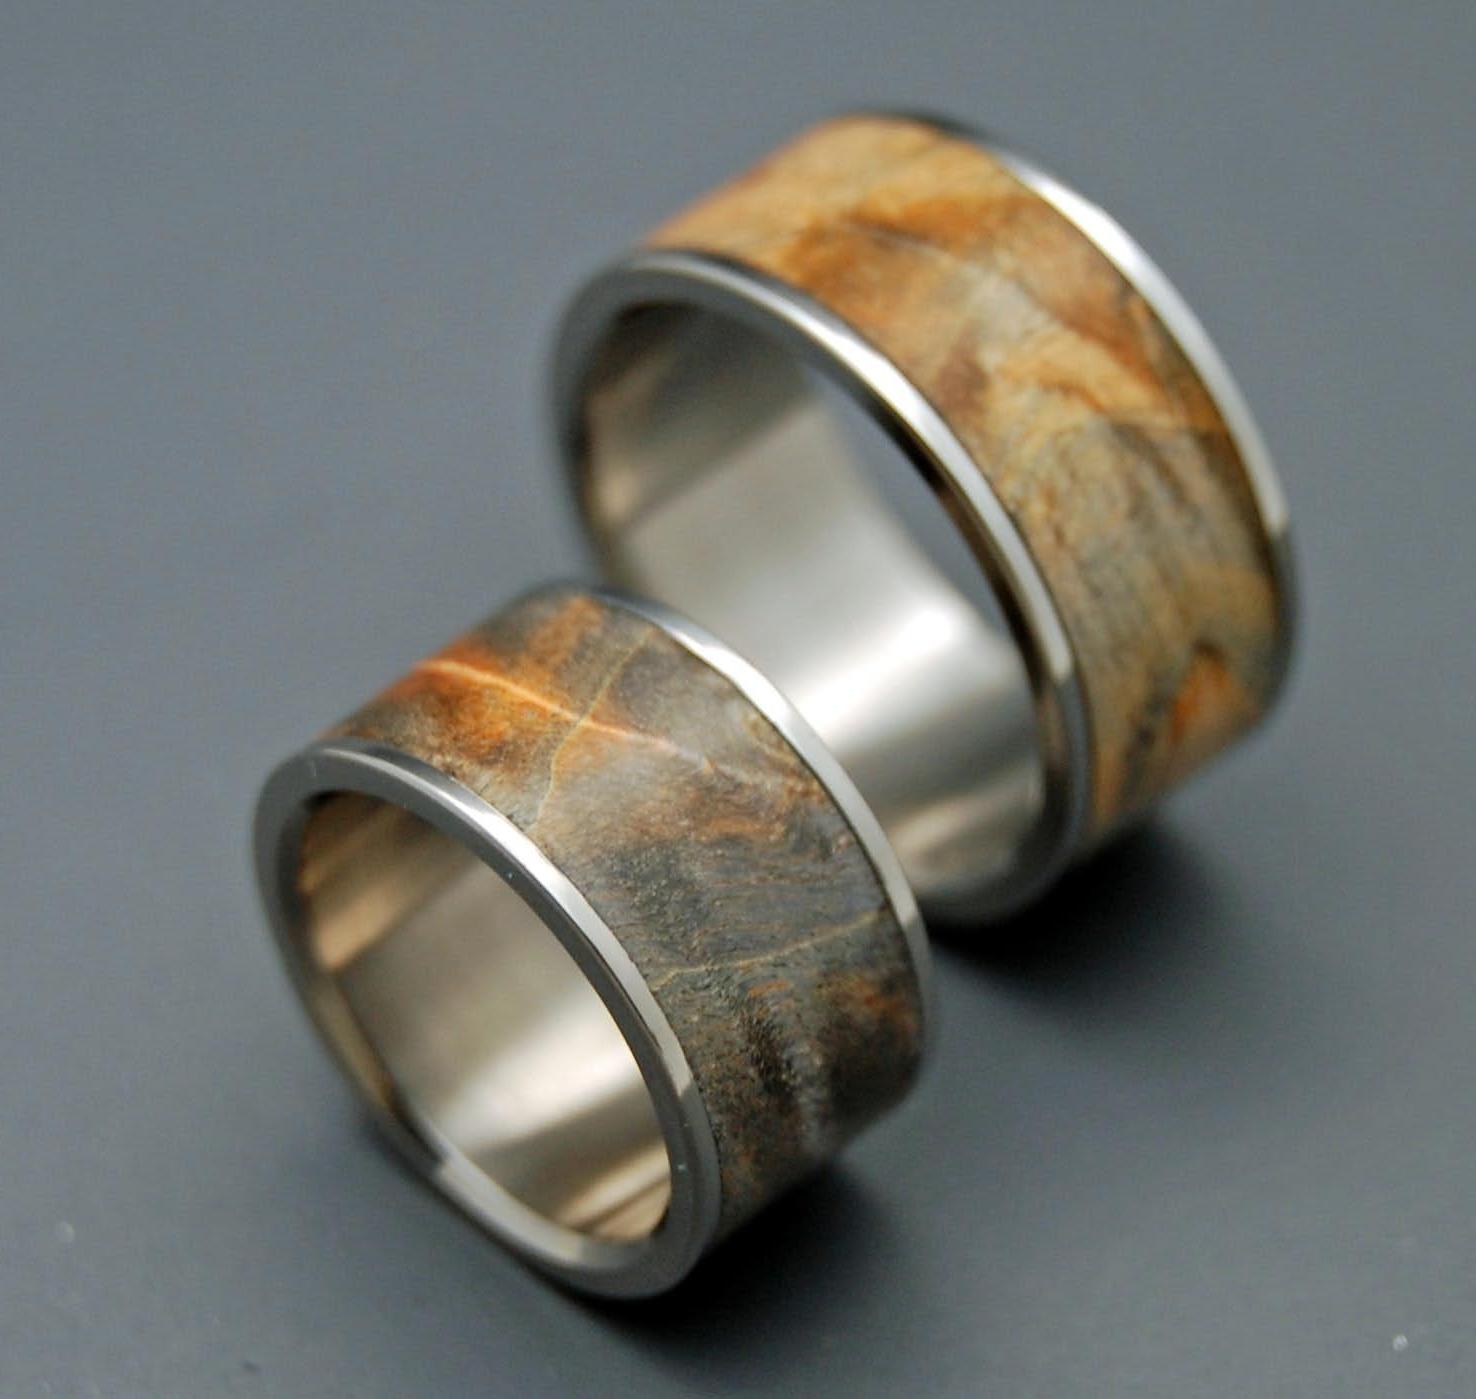 Across the Universe - Wooden Wedding Rings. From MinterandRichterDes